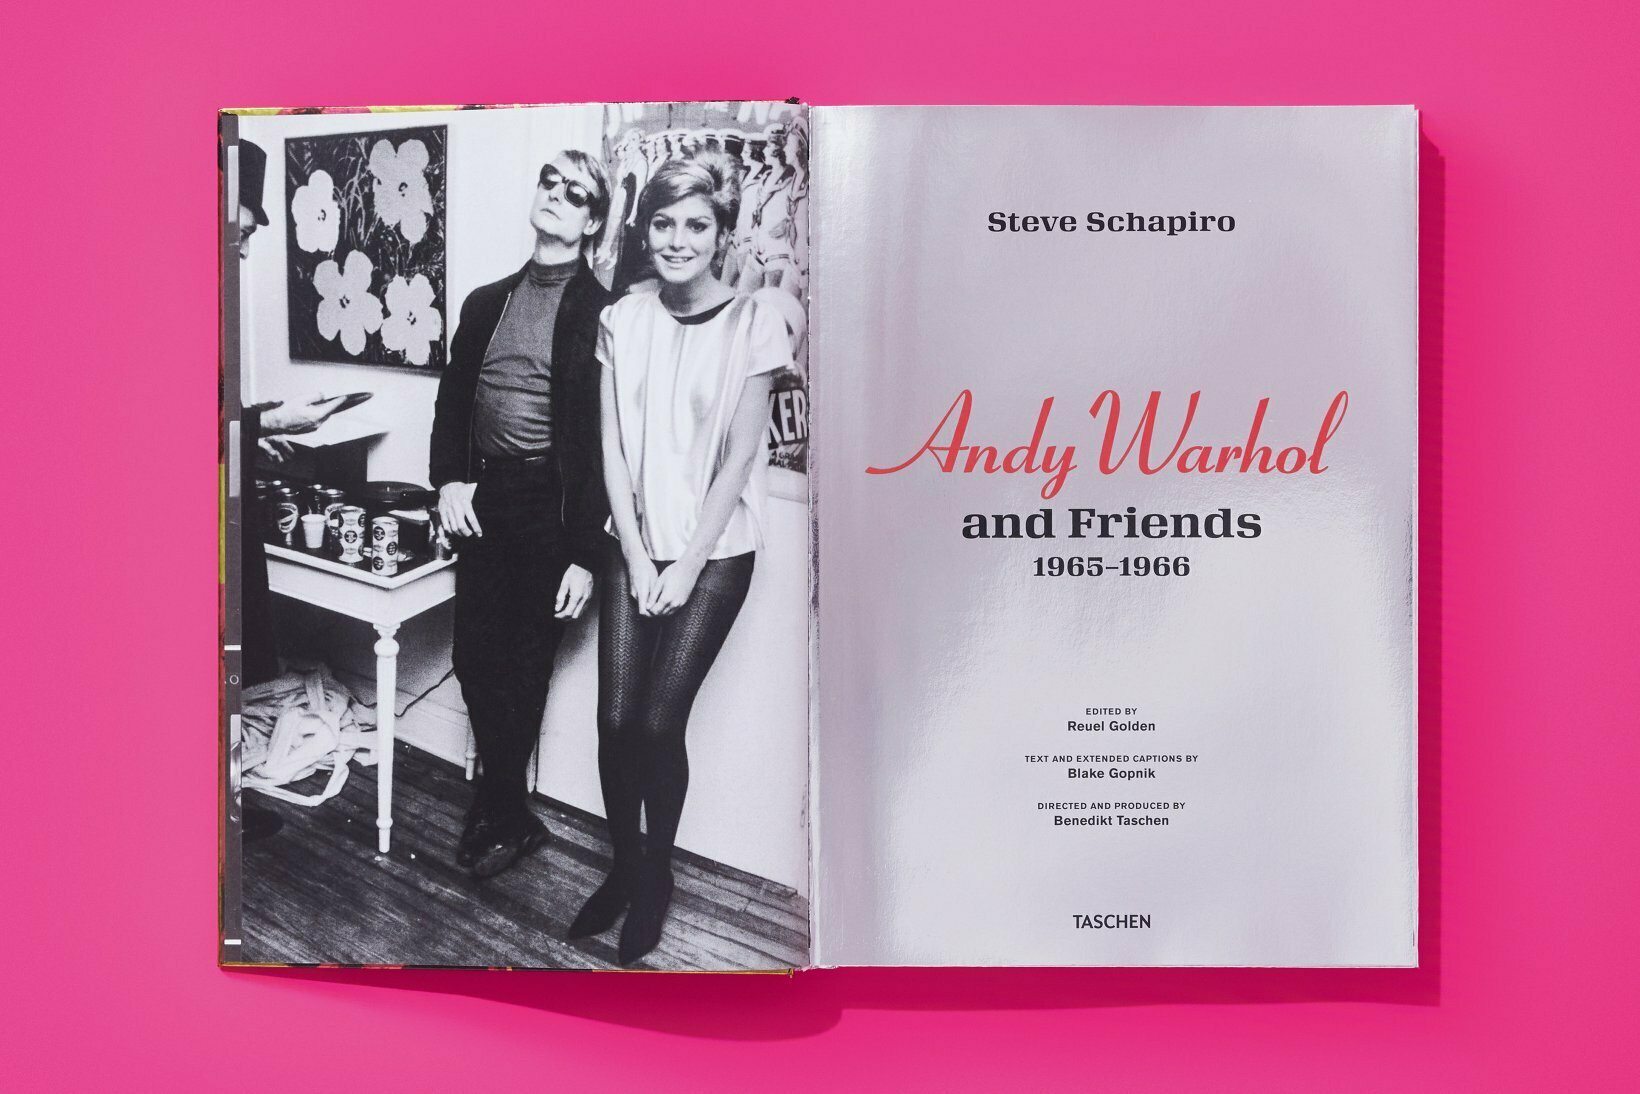 “Andy Warhol and friends (1965-1966)” par Steve Schapiro. Courtesy of Taschen.